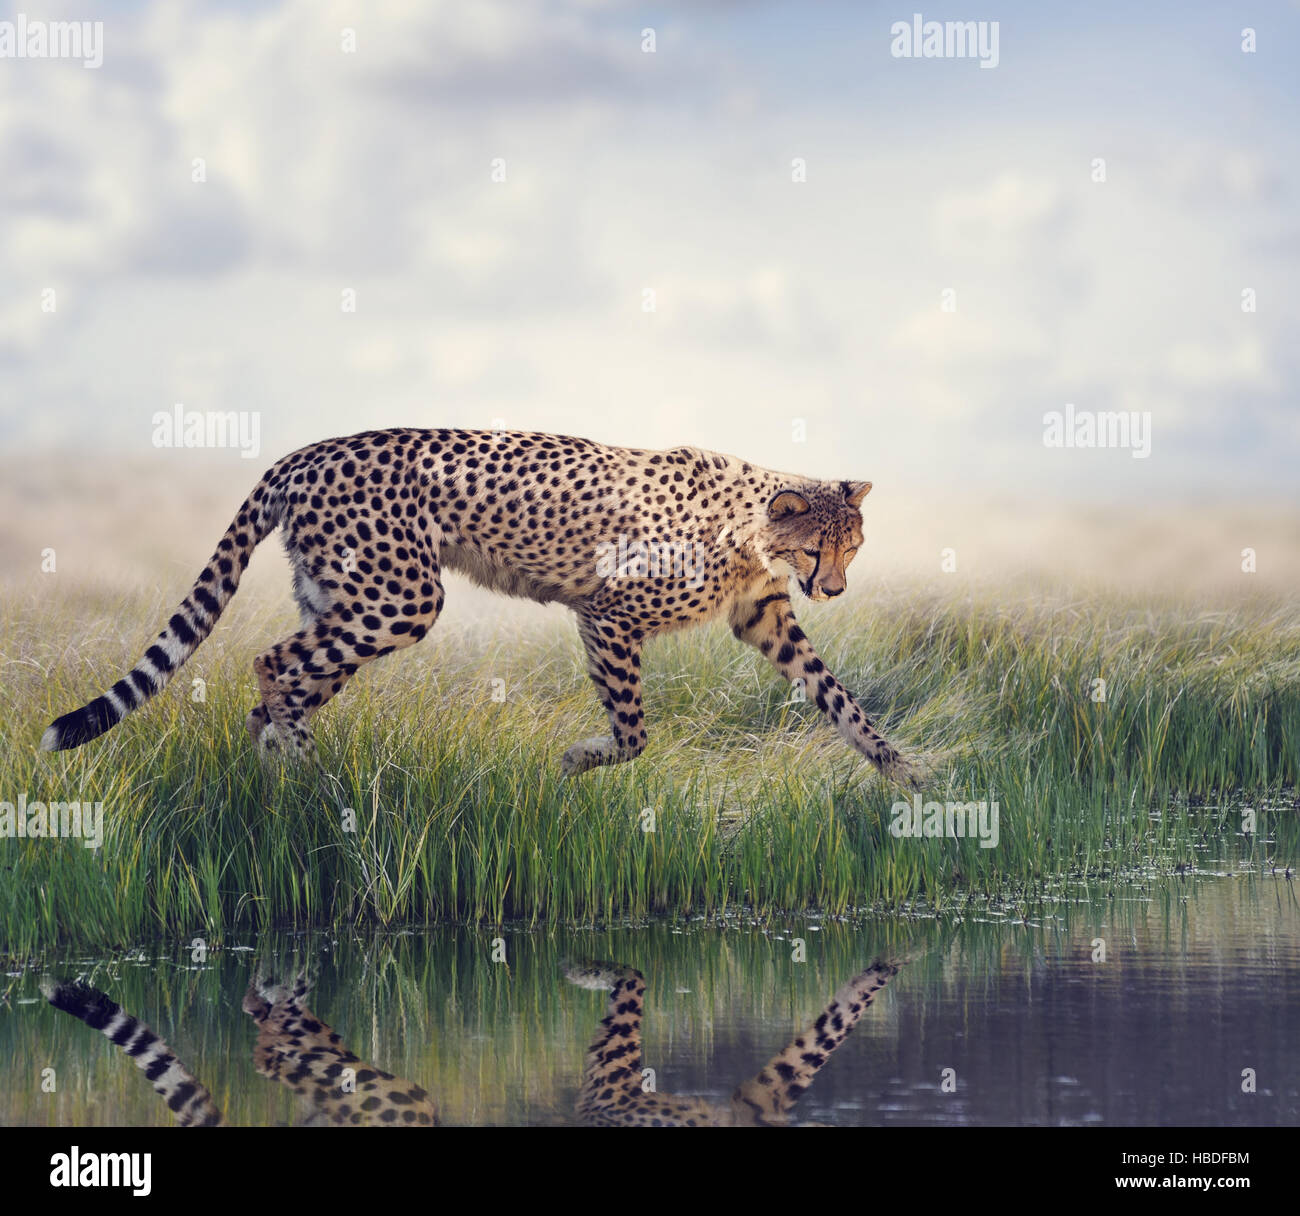 Cheetah near pond Stock Photo